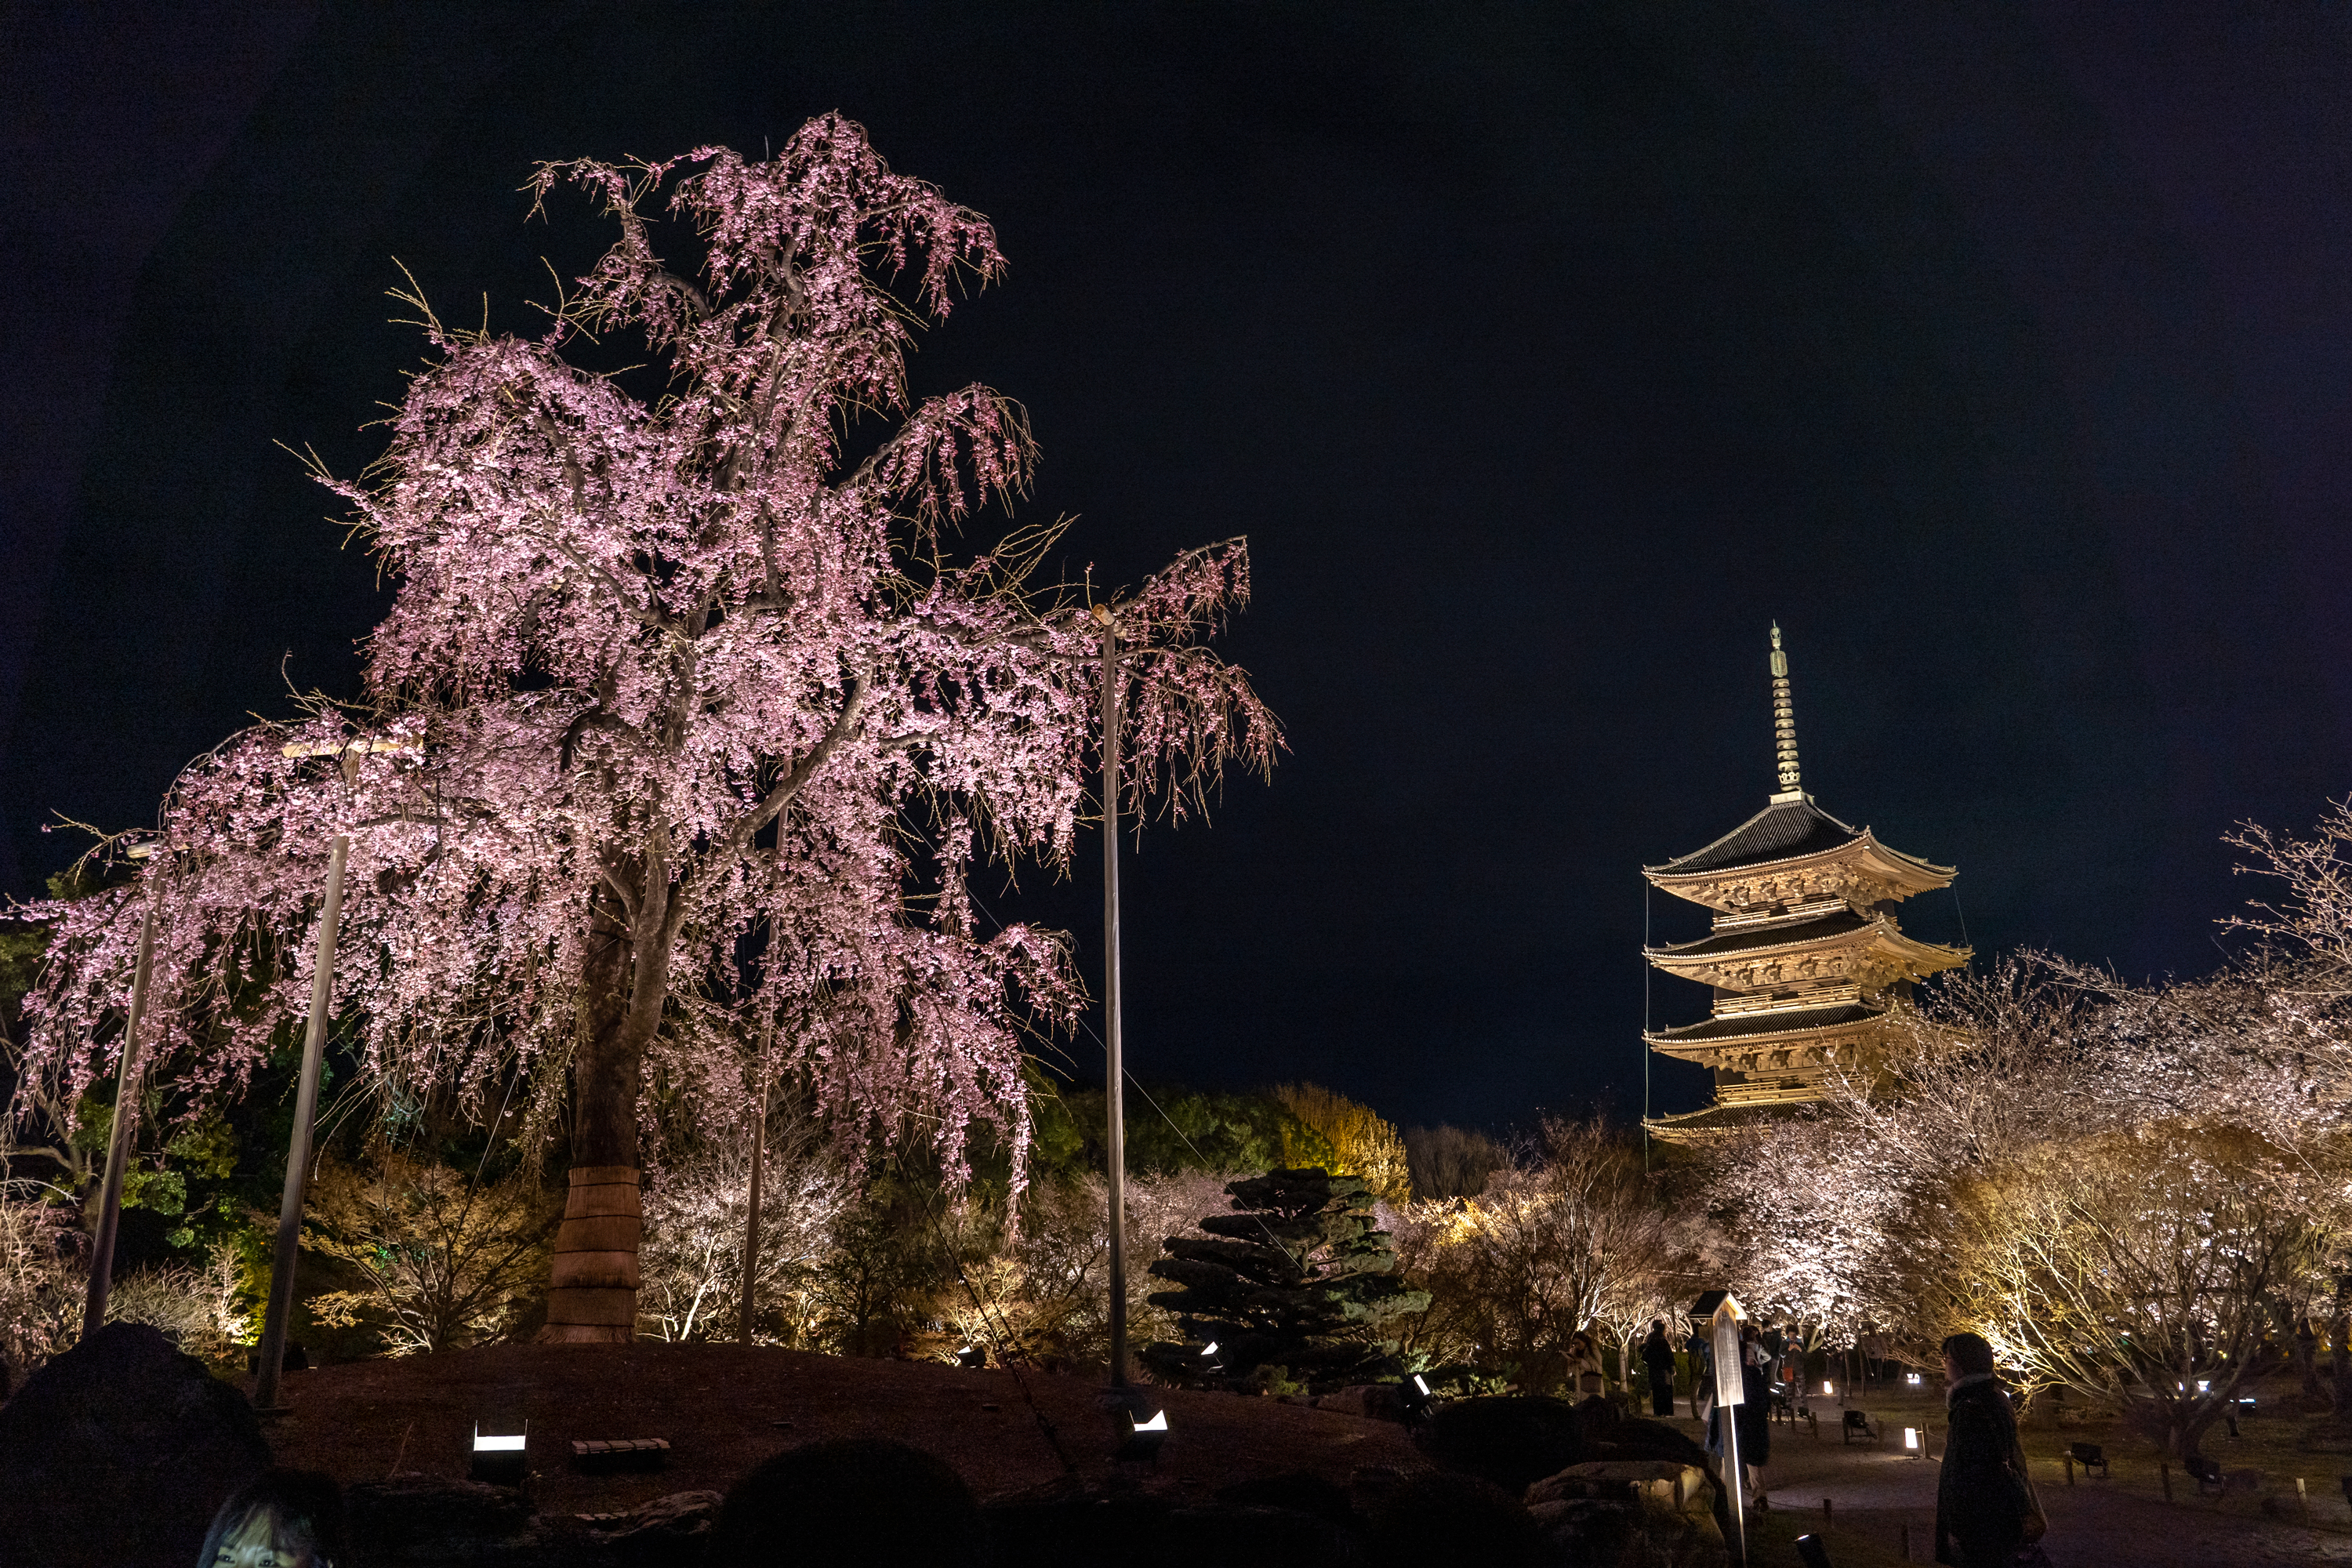 SONY_ILCE-7M3_3098619378-3098668207_1487 京都府 東寺(水面に映る五重塔と桜の美しい景色！ 京都の春におすすめ桜写真スポット！ 撮影した写真の紹介、アクセス情報など)